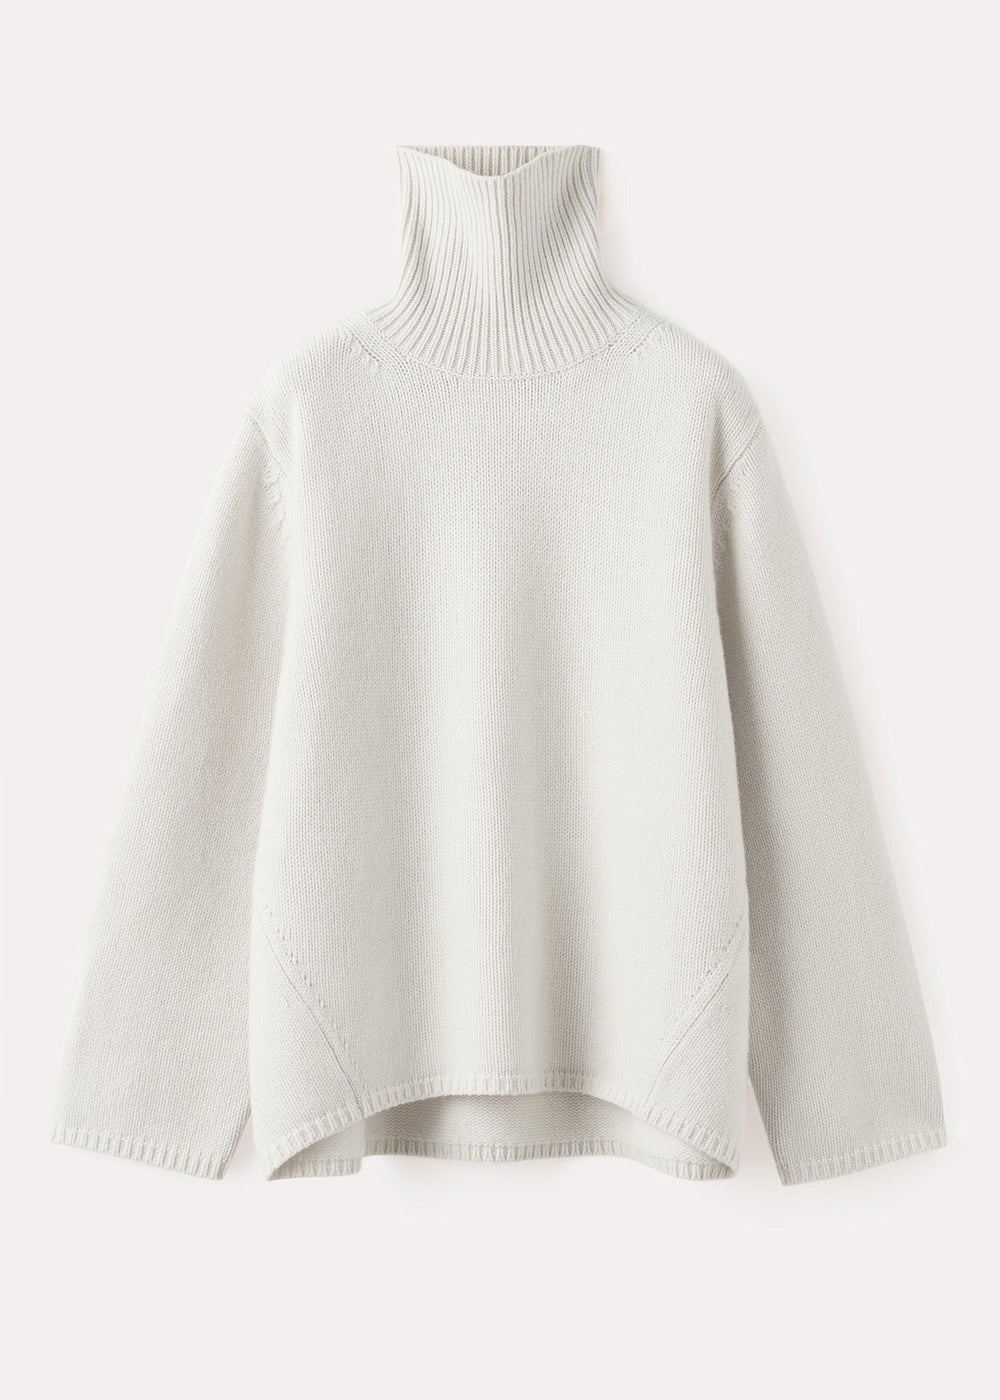 Women Russia Autumn Winter Sweater Loose 50% Wool Turtleneck Sweater Bottoming Shirt